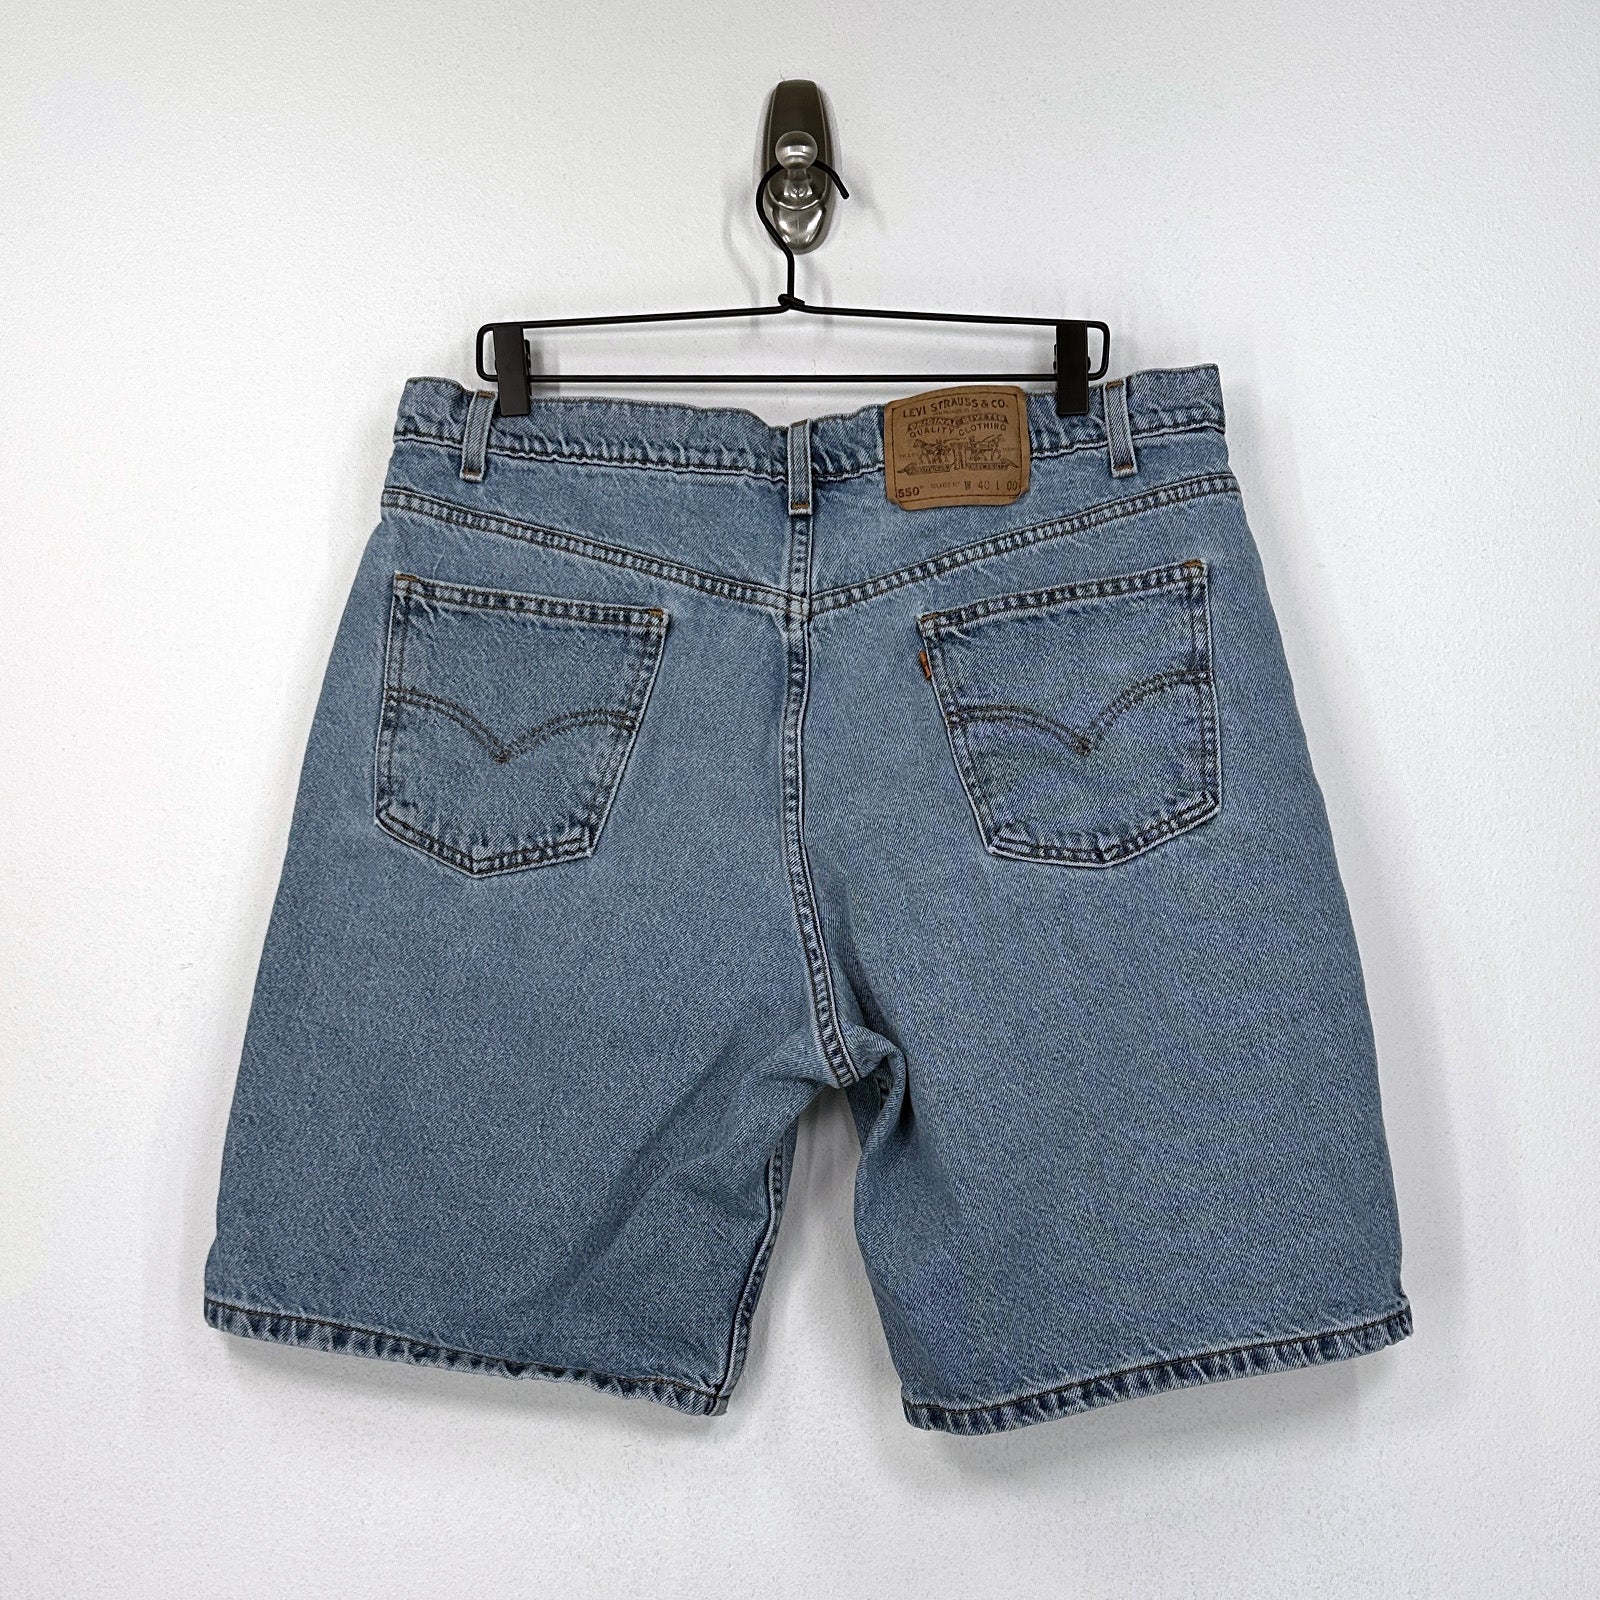 Vintage '90s Levi's 550 Shorts - Orange Tab - Waist 37 Great Lakes Reclaimed Denim